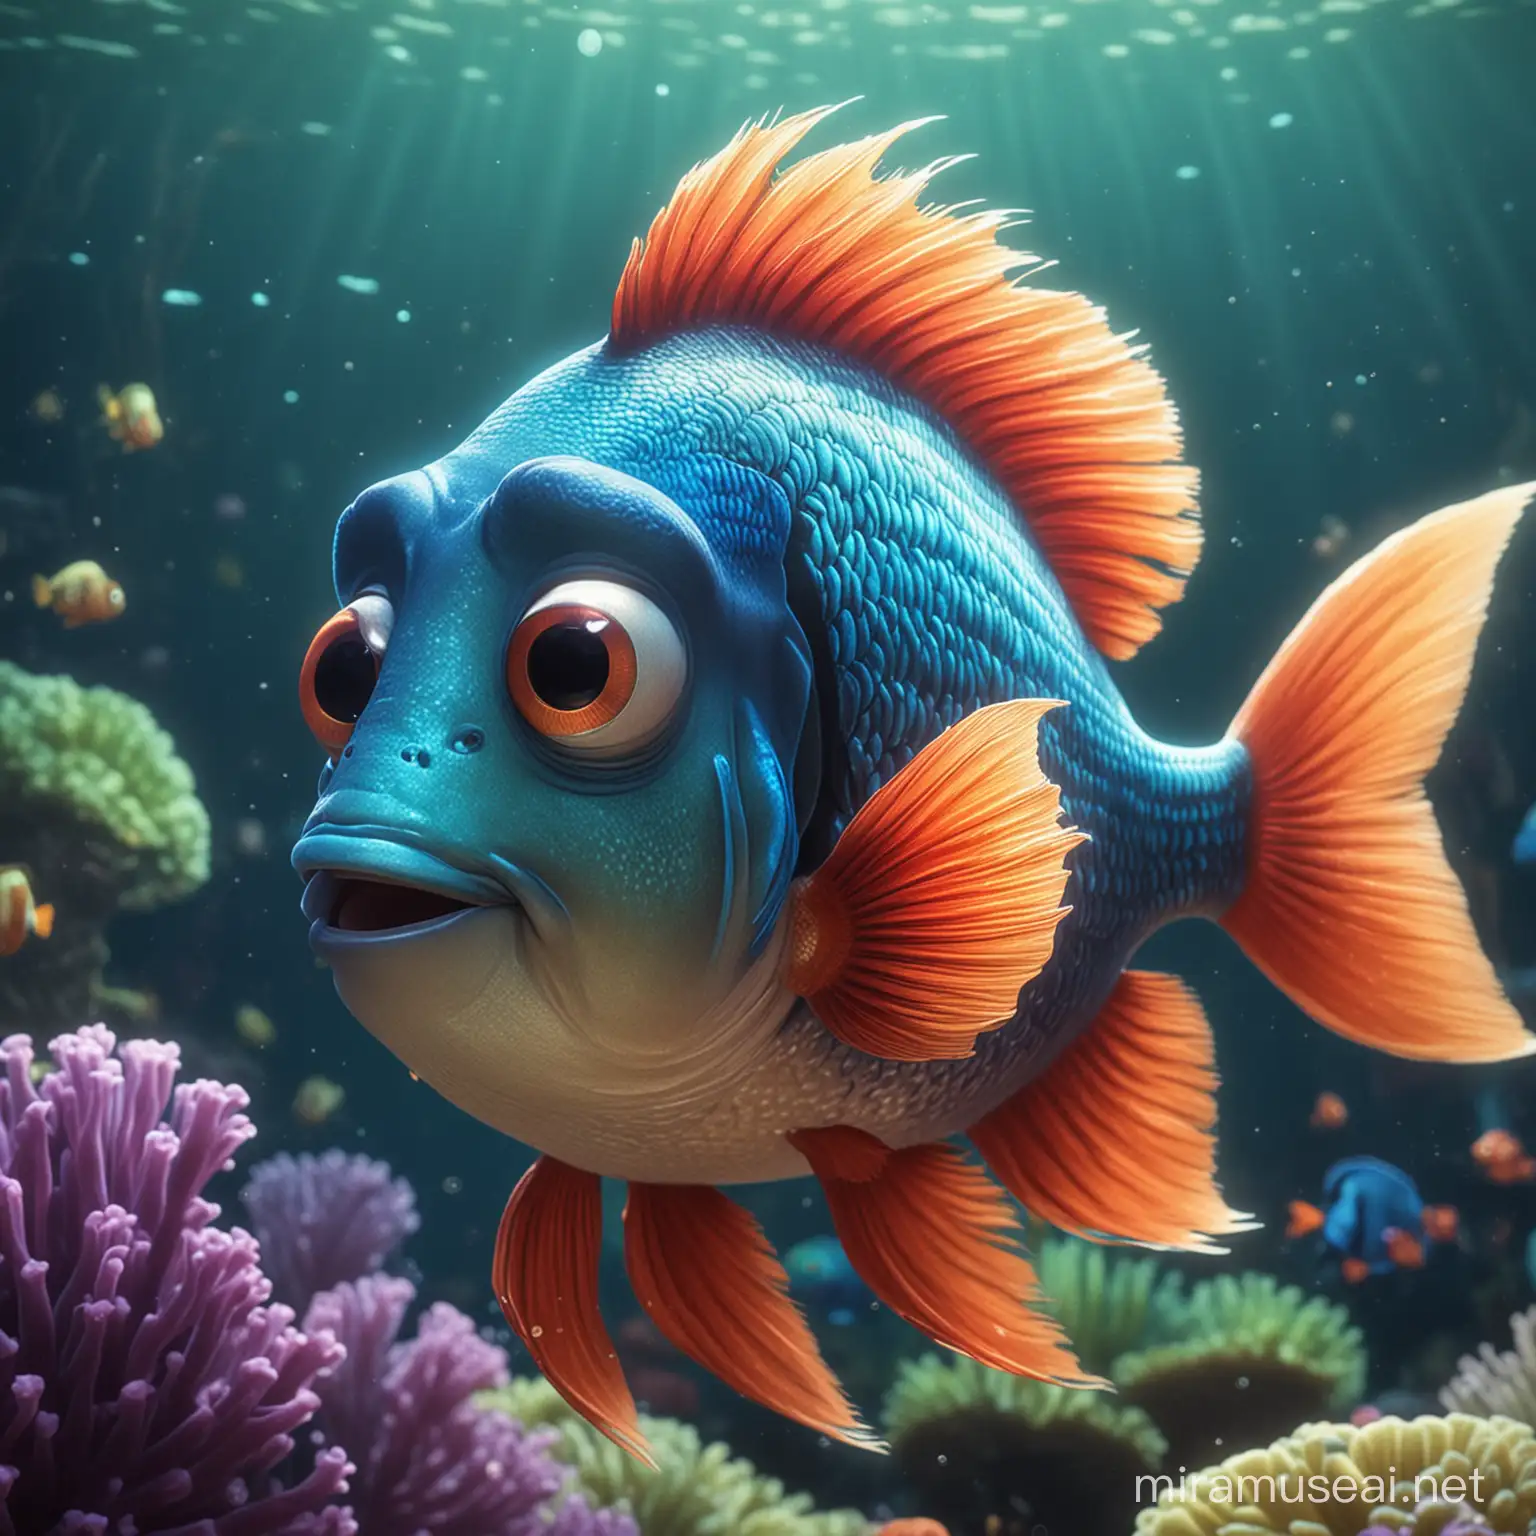 a  beautiful fish  ,disney pixar style